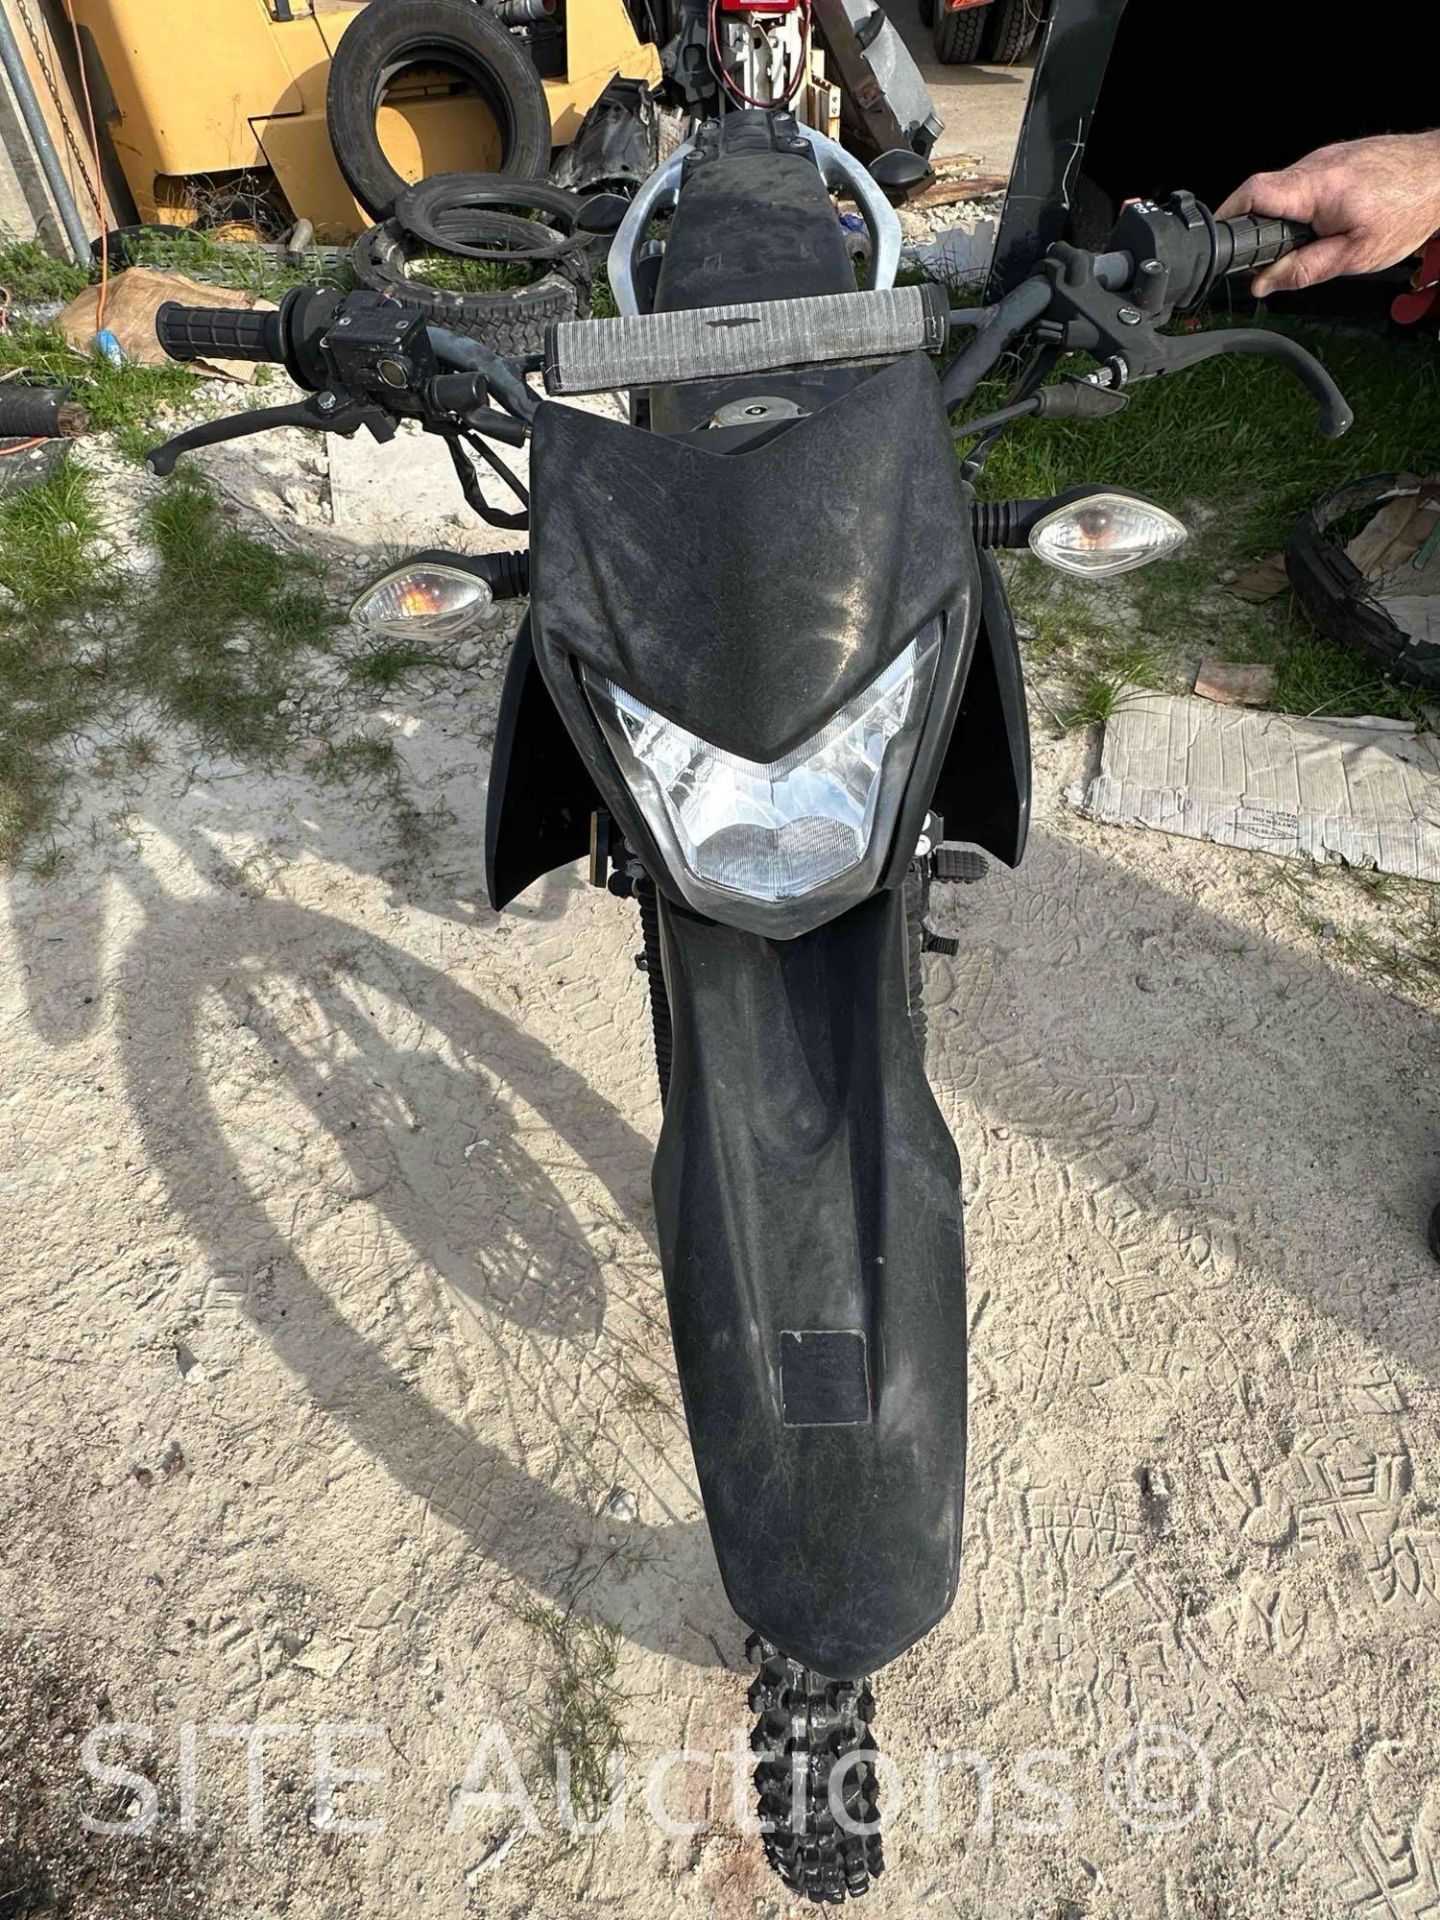 2021 Haosen Hawk 250 Dirt Bike - Image 3 of 11